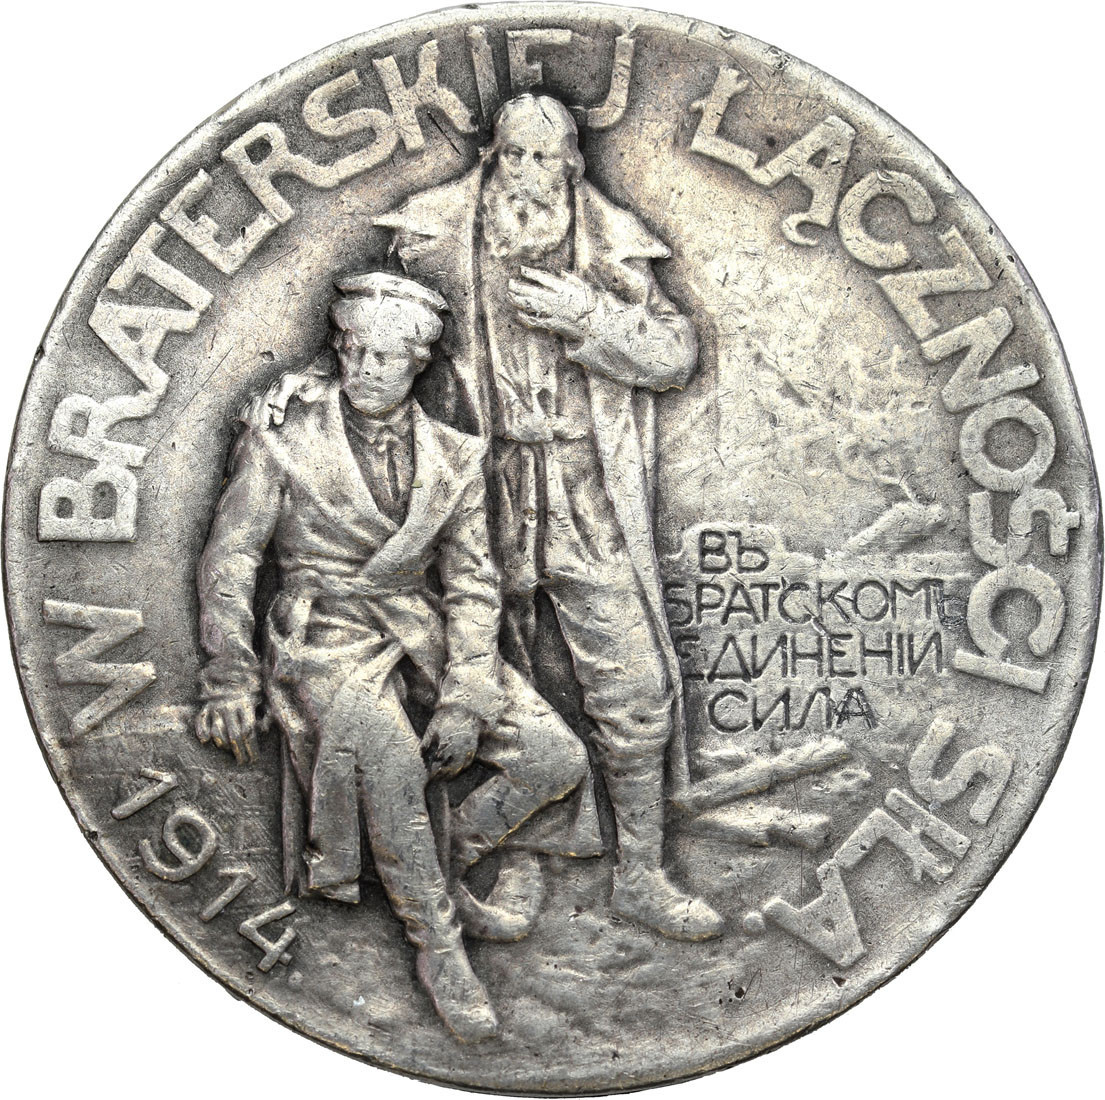 Polska pod zaborami. Medal Rosjanie Braciom Polakom 1914, wariant  32,7 mm